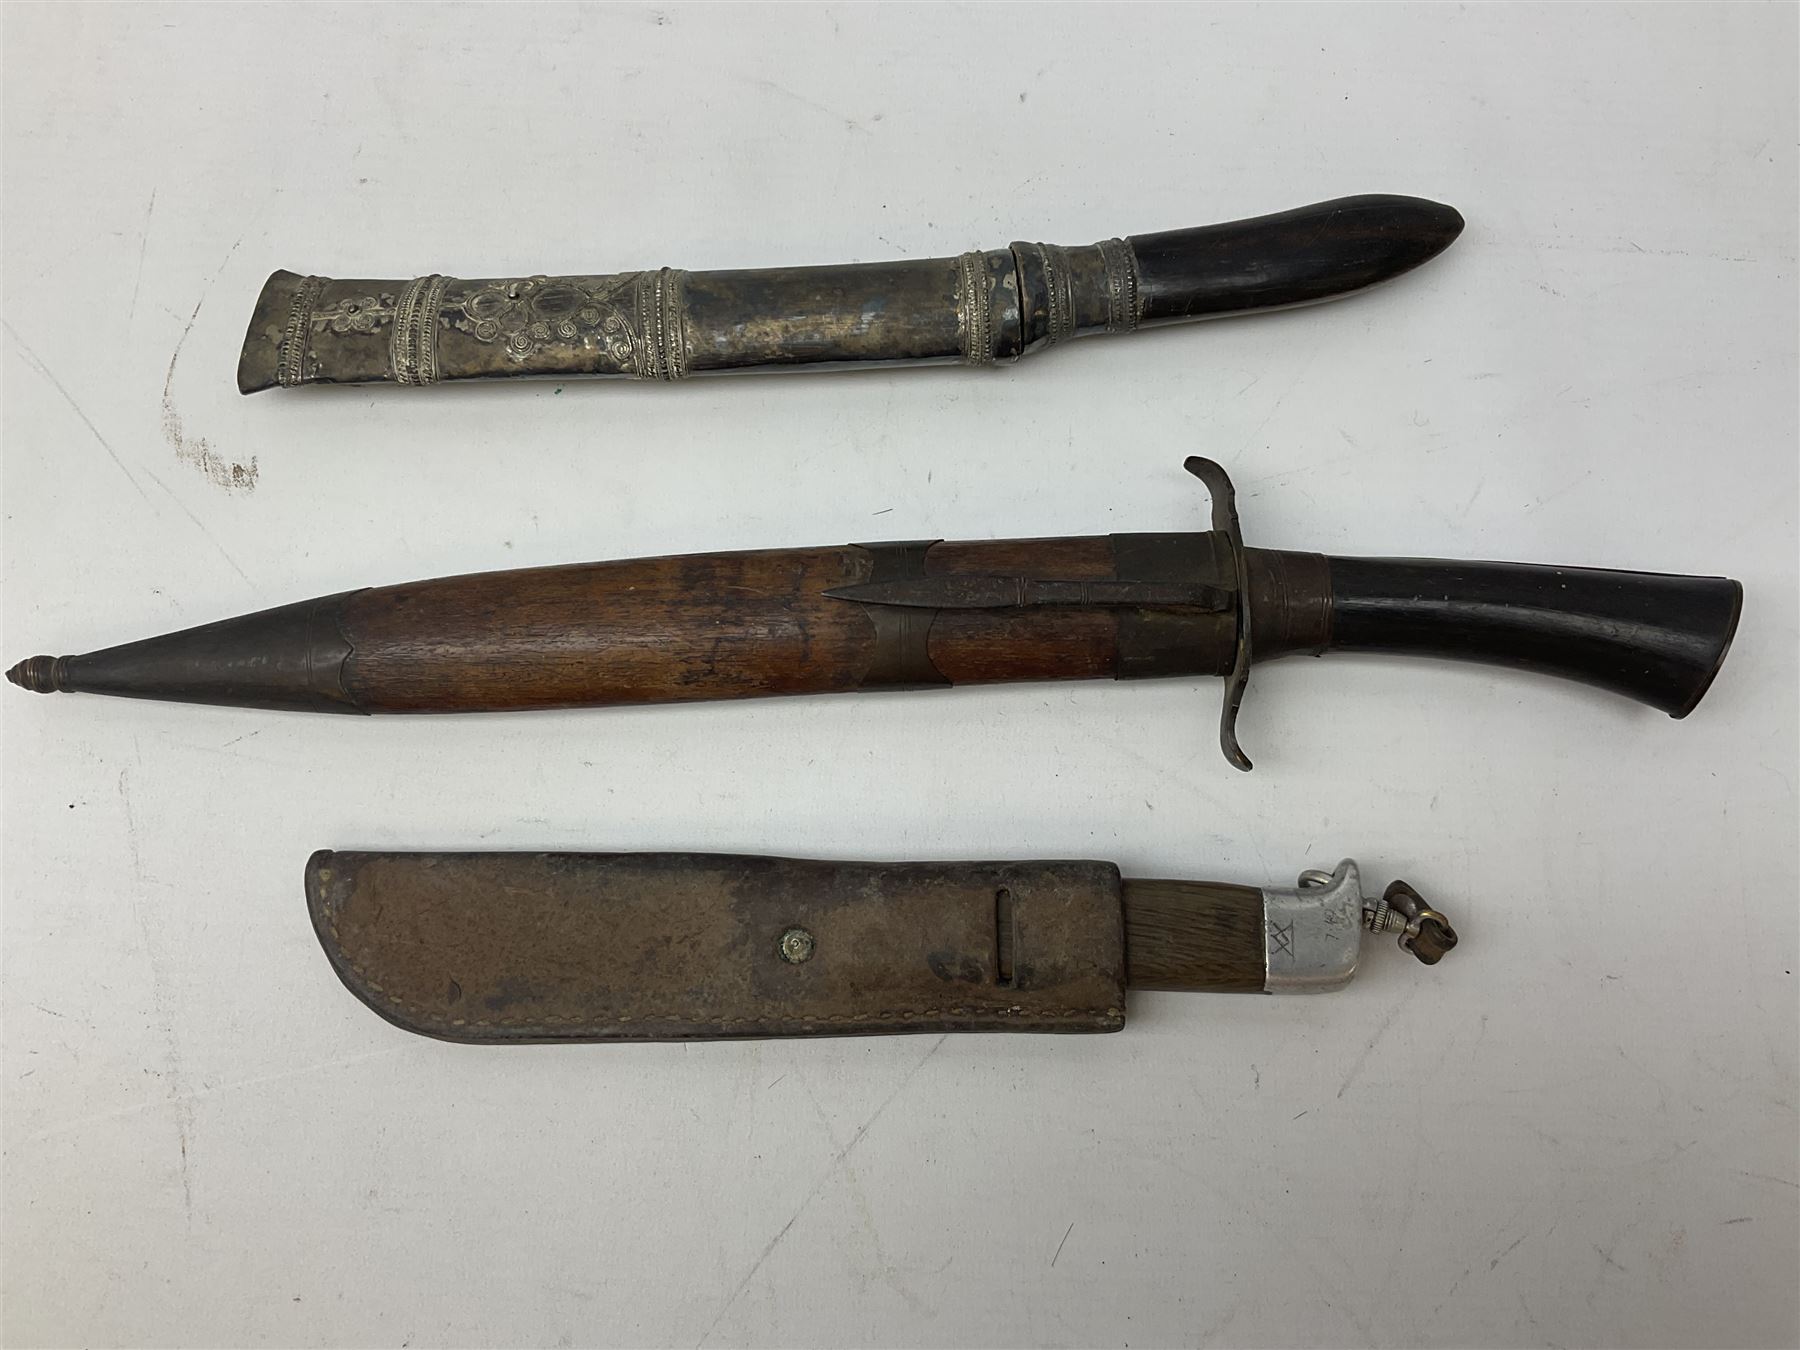 Burmese dha dagger with 15cm steel blade - Image 30 of 30